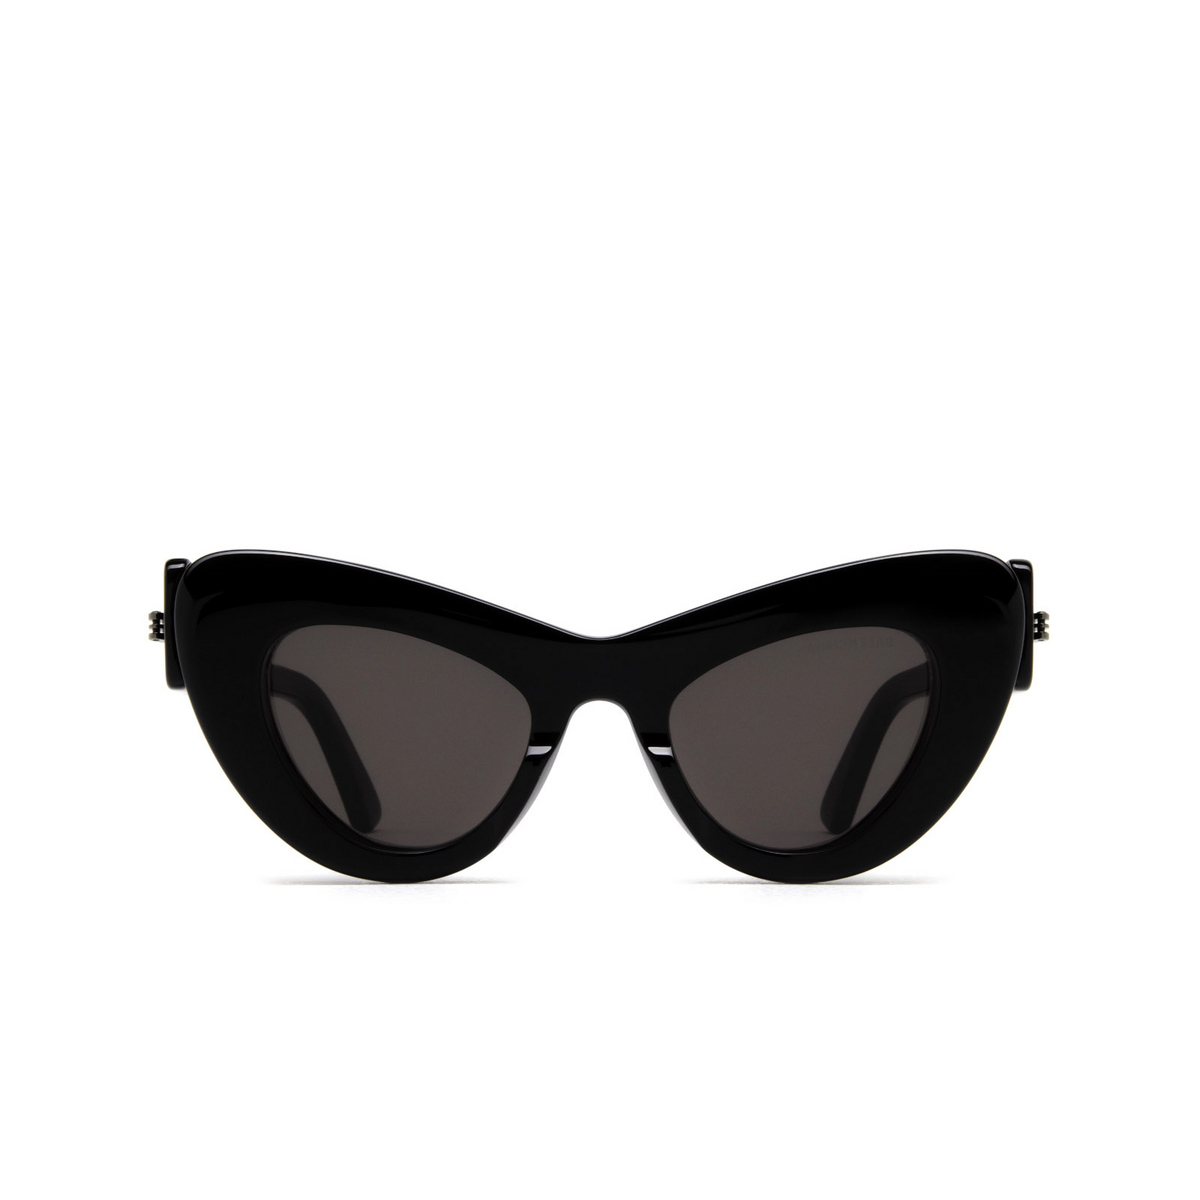 Balenciaga Mega Sunglasses 001 Black - front view